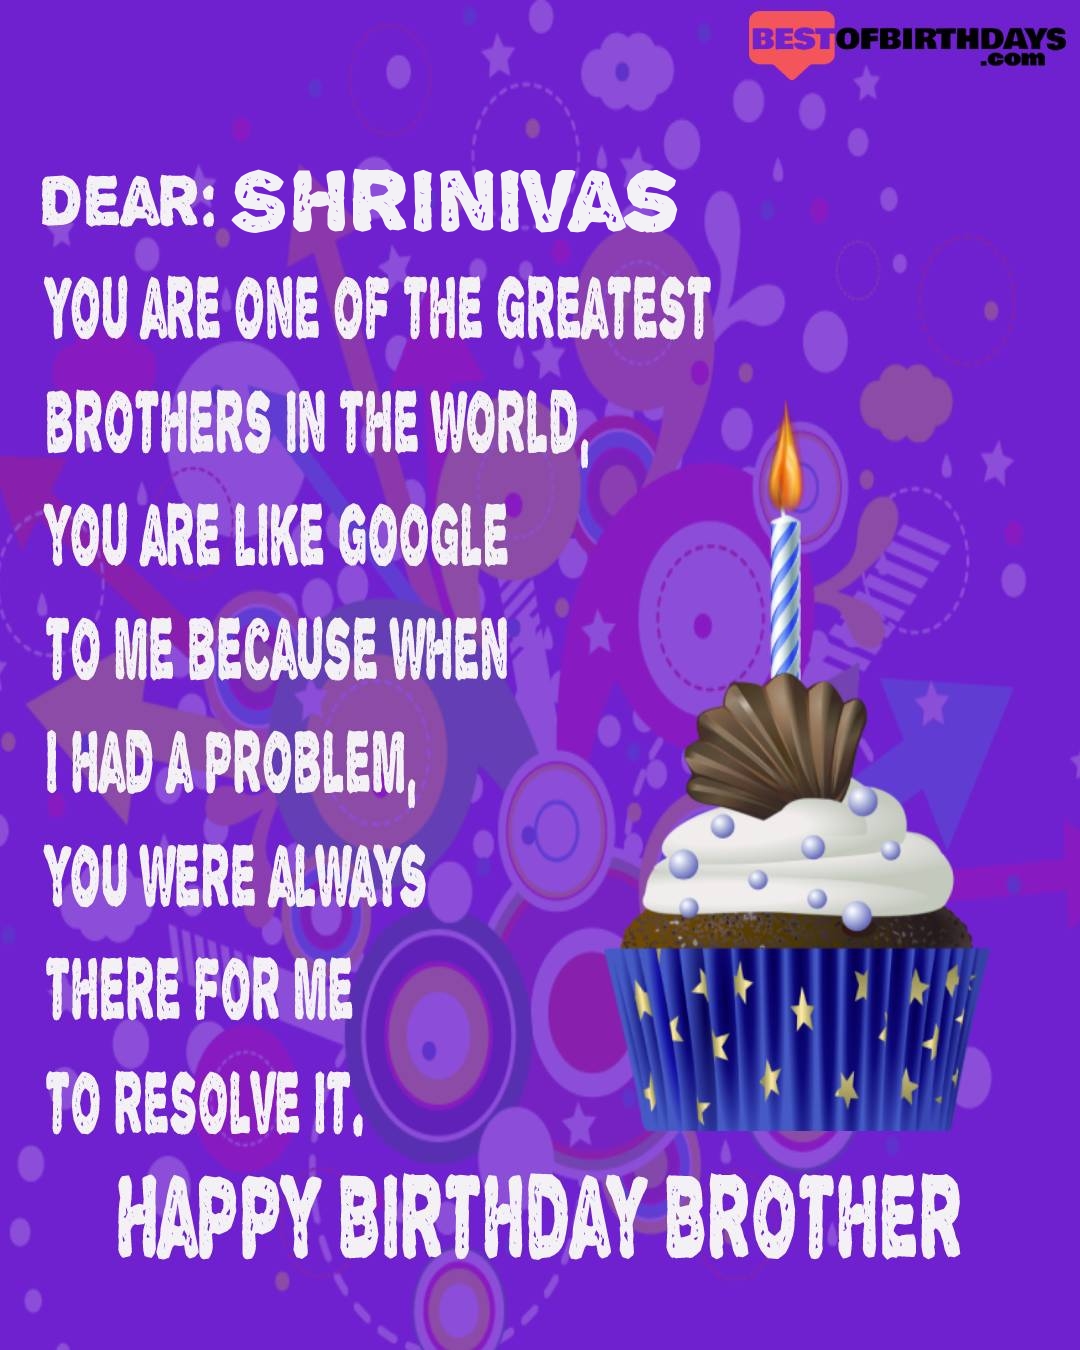 Happy birthday shrinivas bhai brother bro